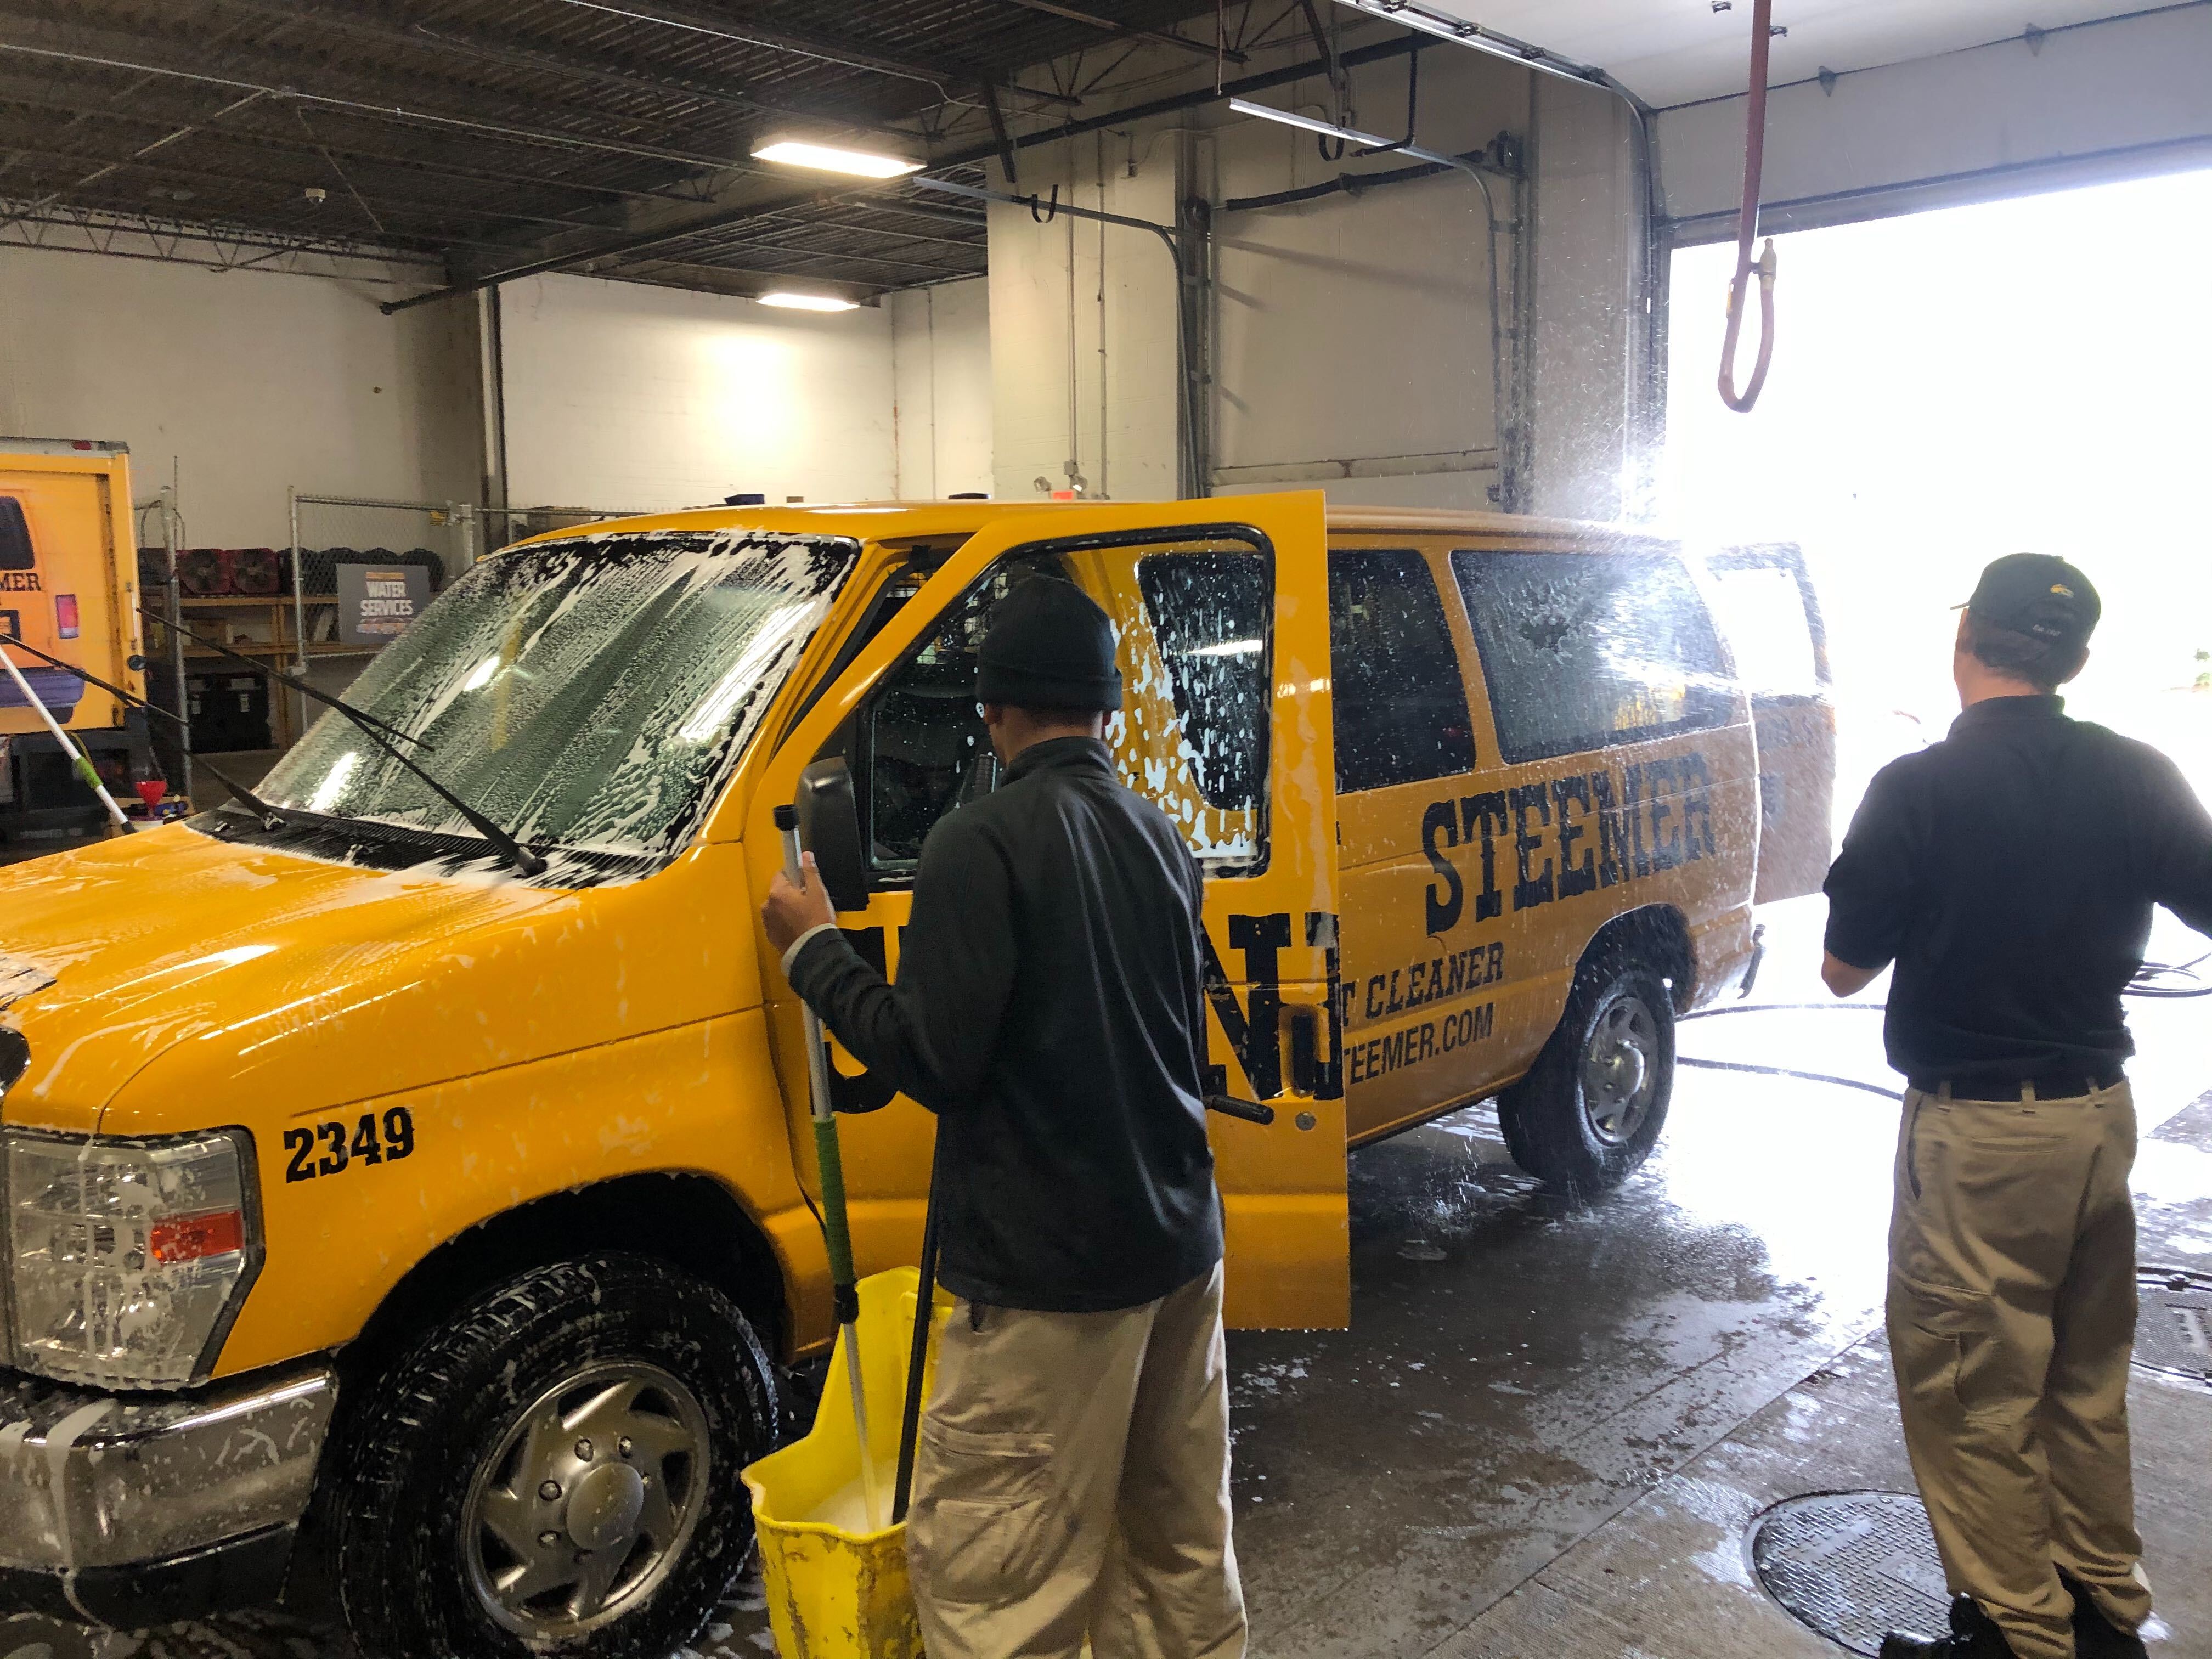 Stanley Steemer truck being washed in Cincinnati